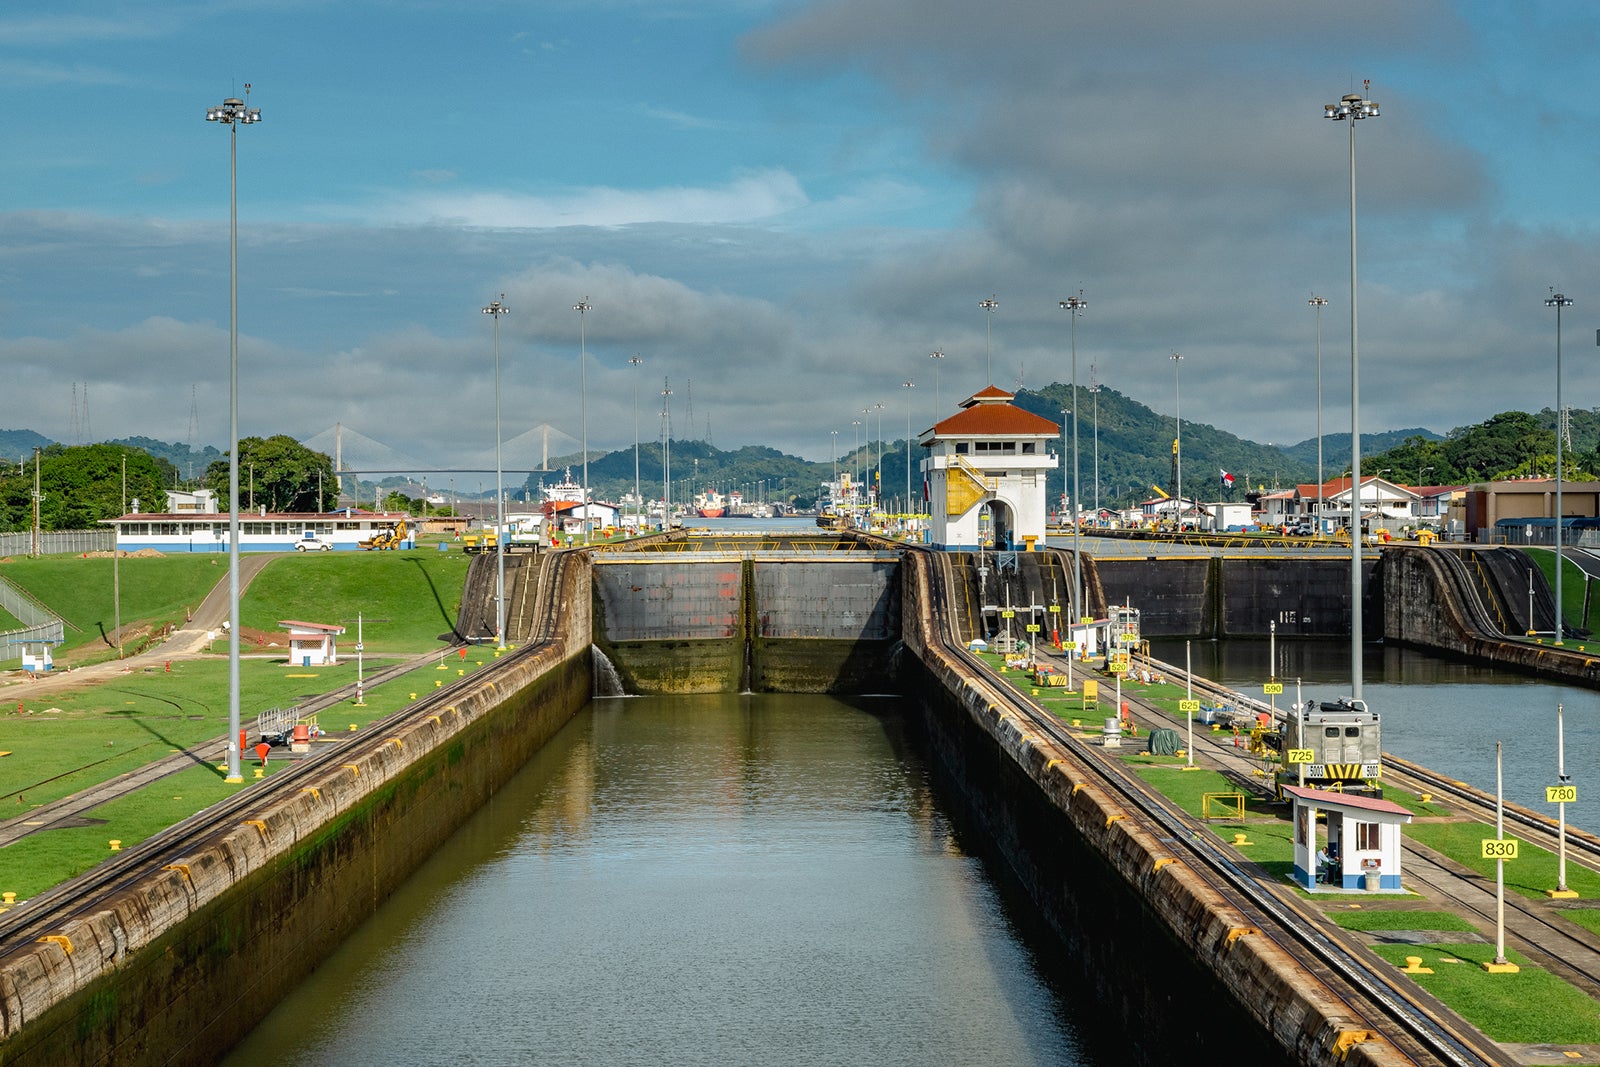 View of the Miraflores Locks